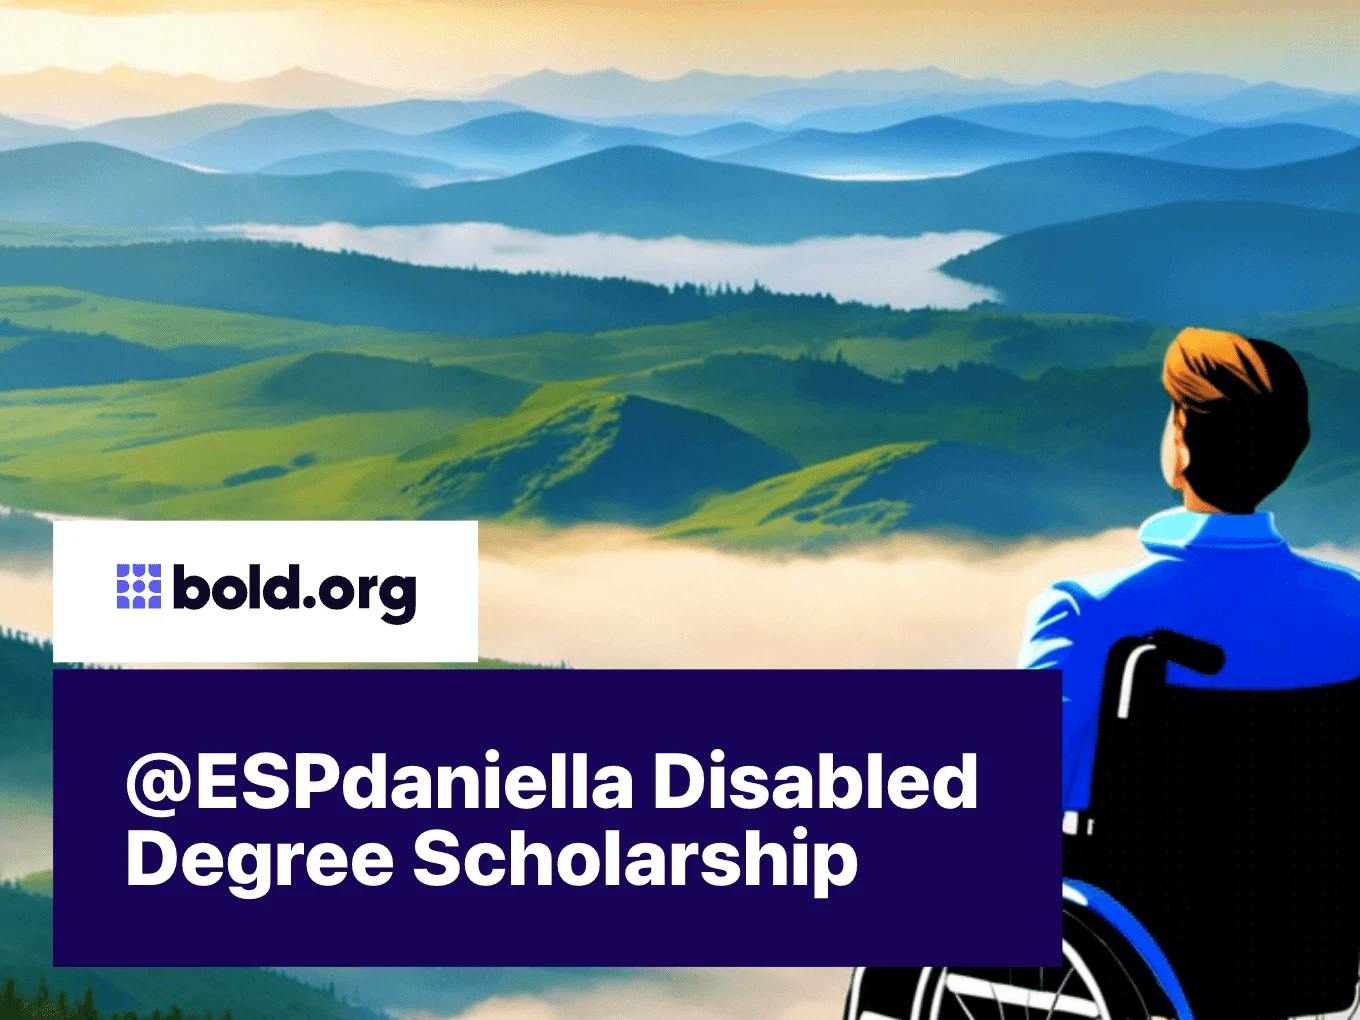 @ESPdaniella Disabled Degree Scholarship